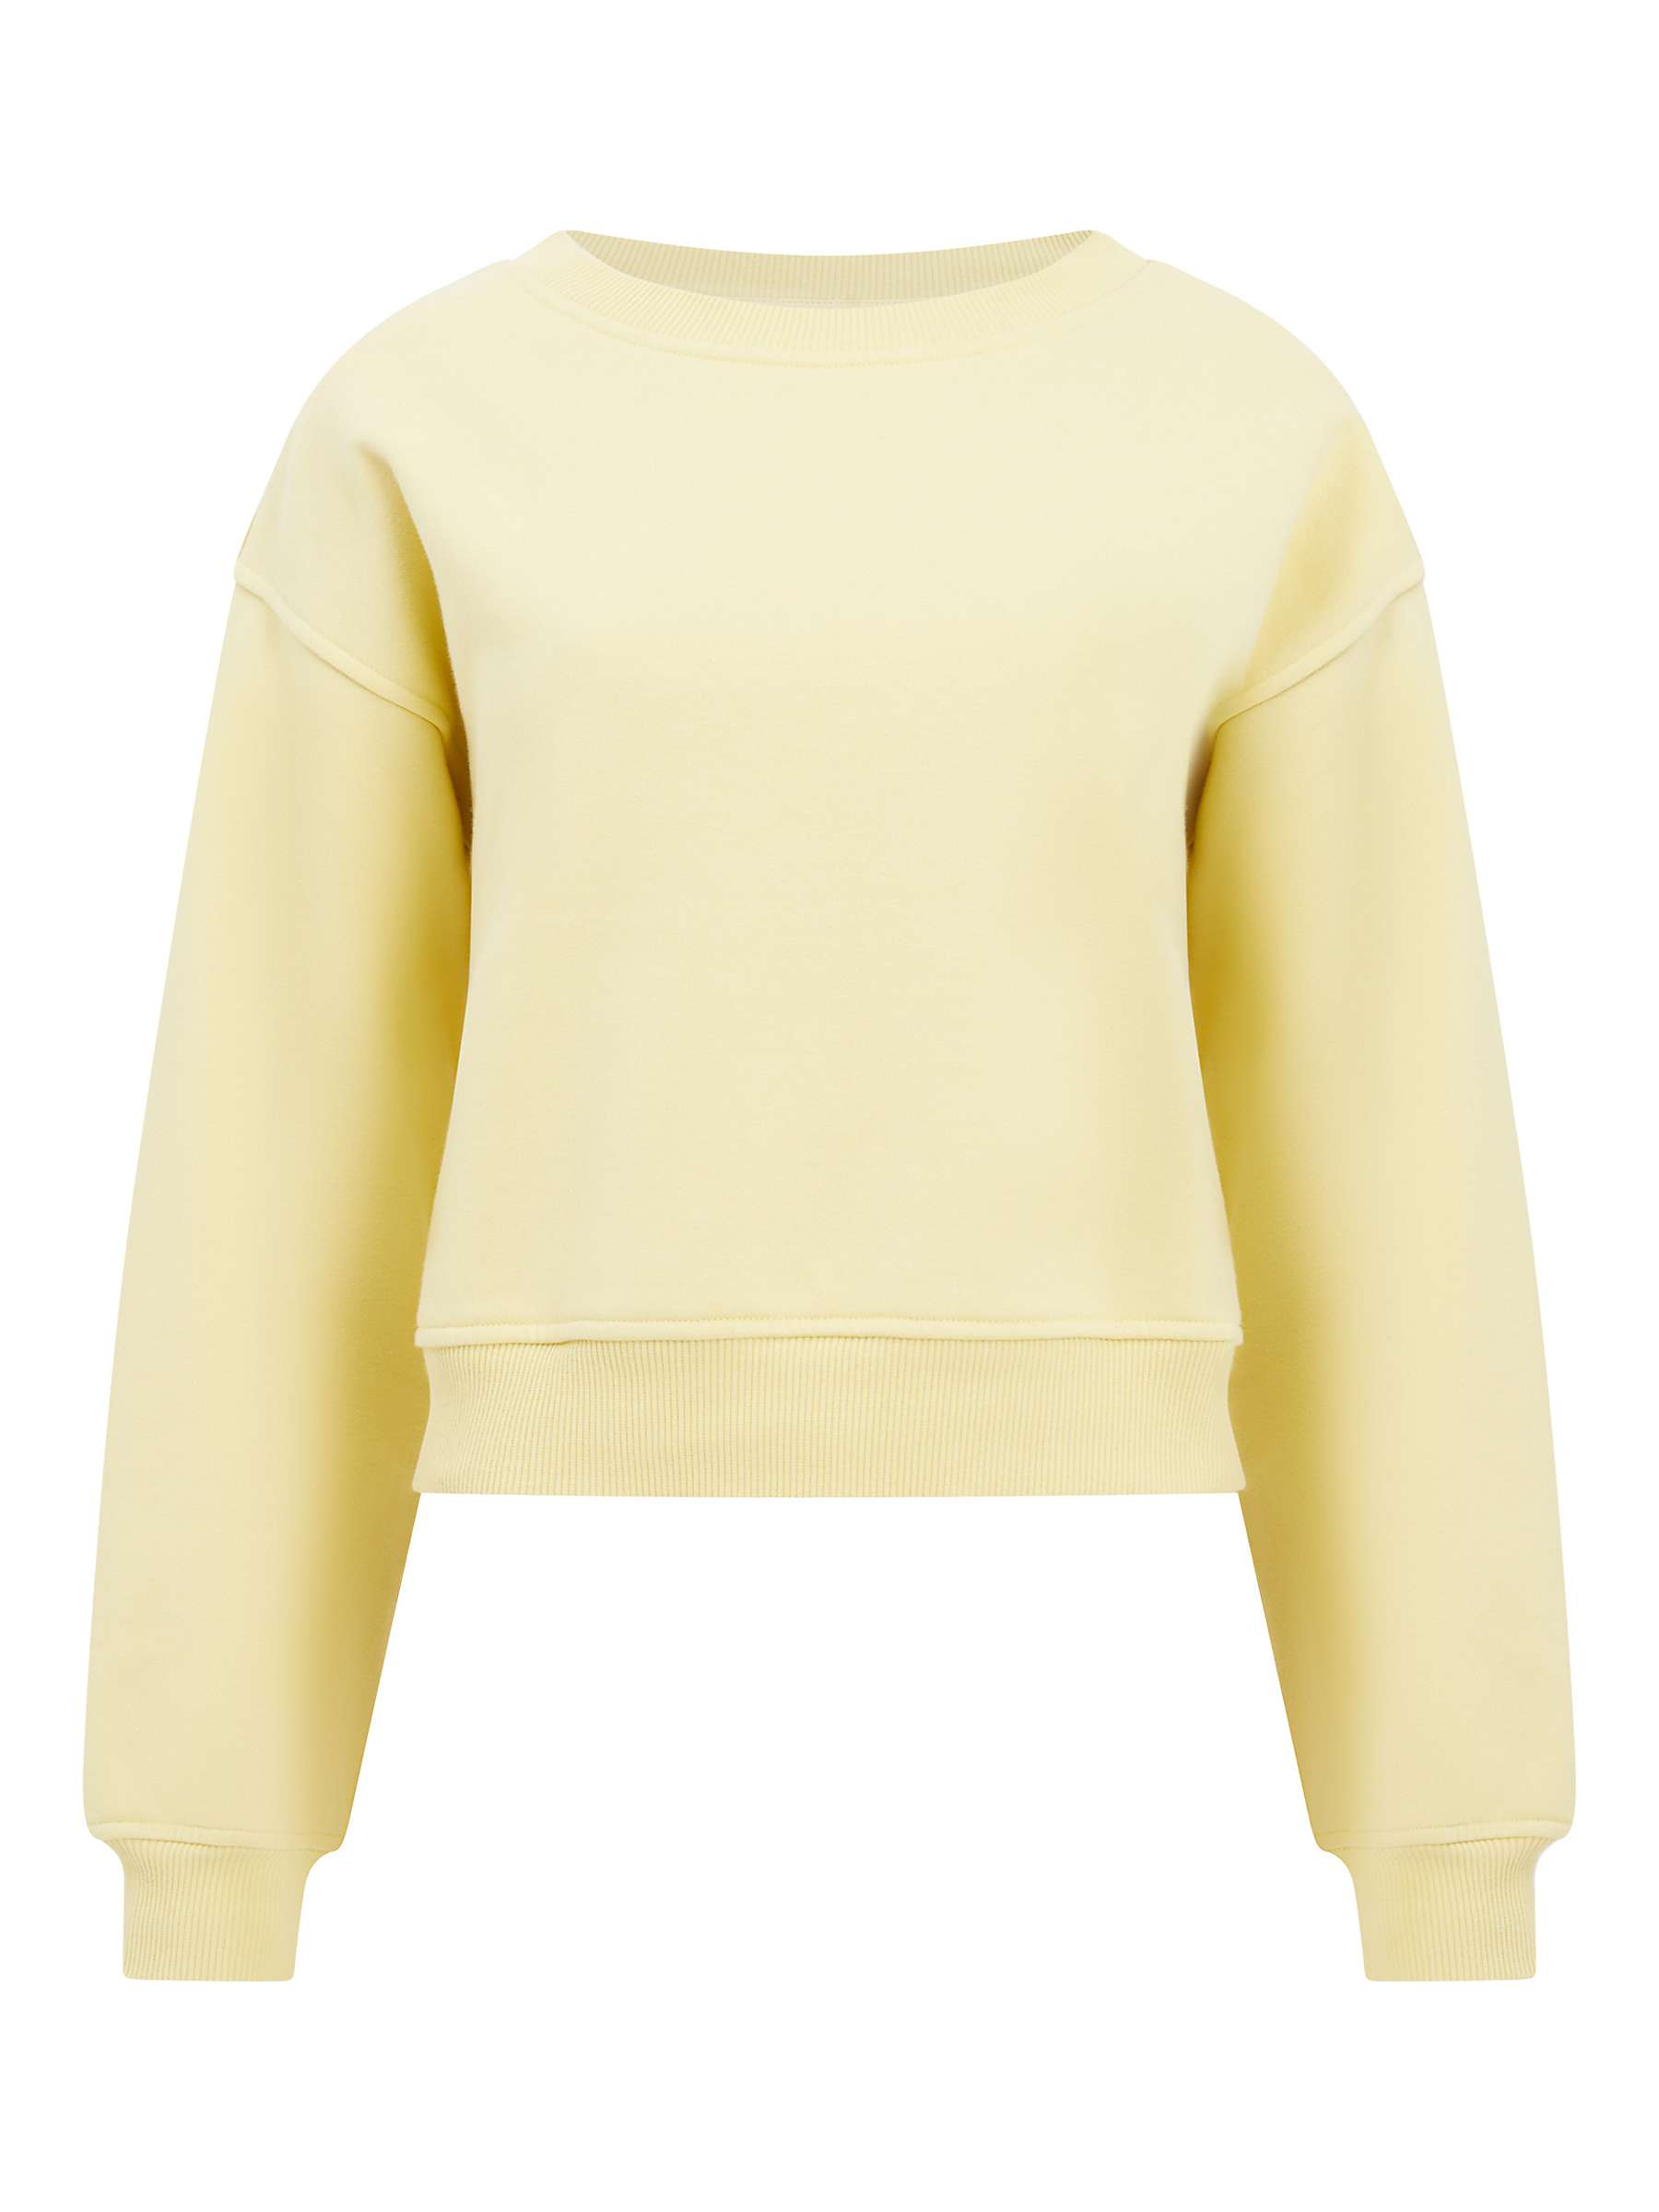 Buy Great Plains Paloma Cotton Blend Cropped Sweatshirt, Lemon Grass Online at johnlewis.com